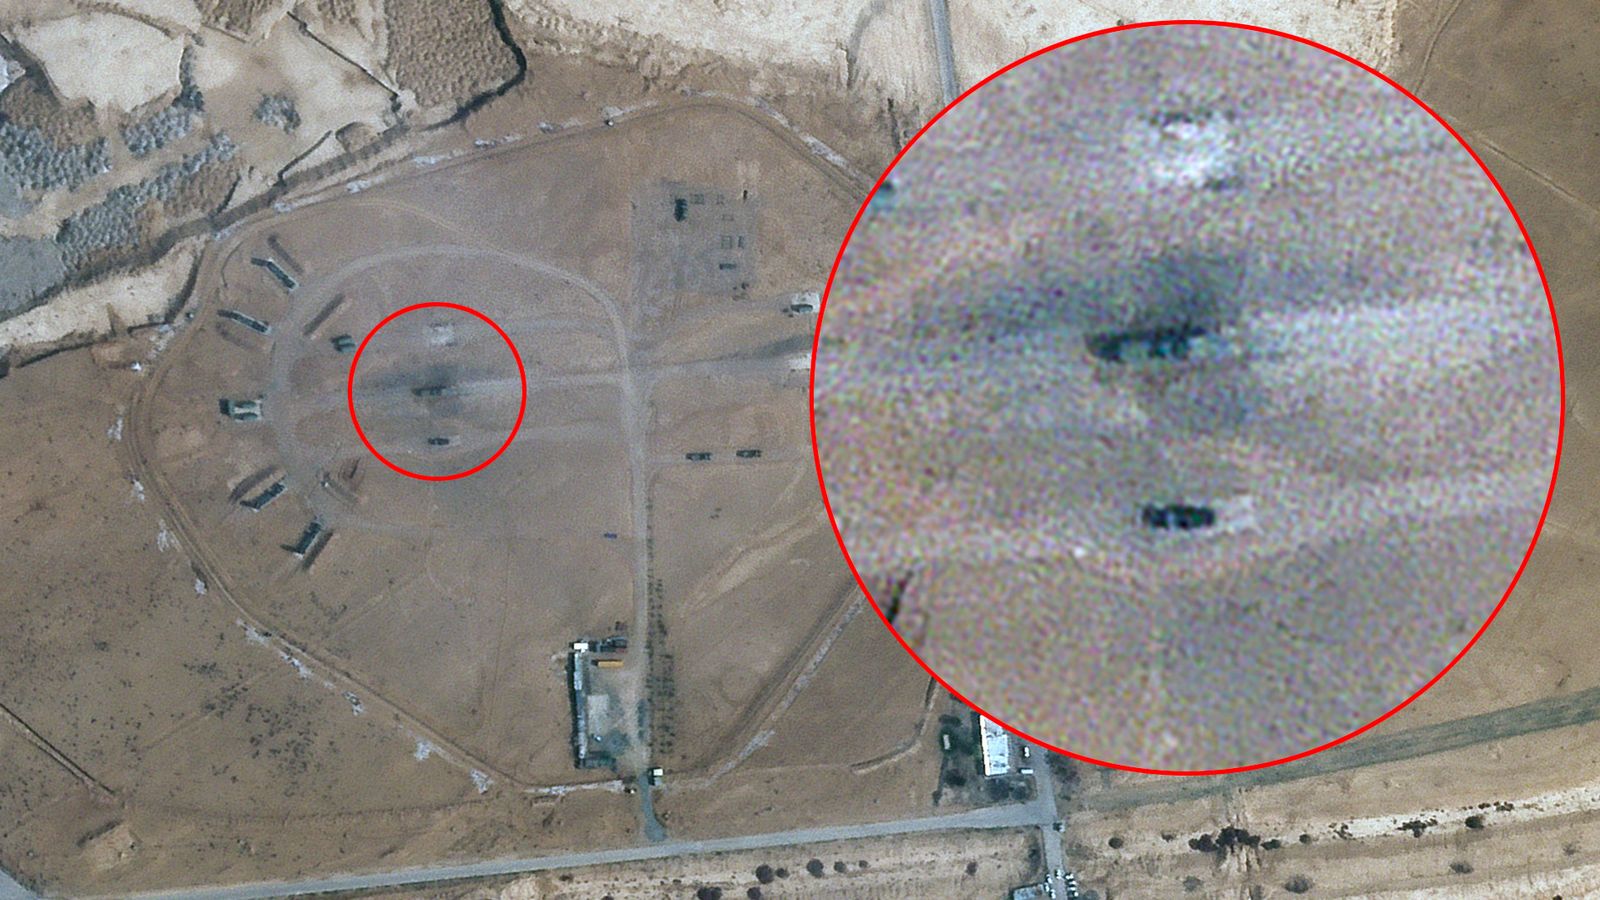 Iranian air defence radar was struck in Israeli attack, satellite photos suggest